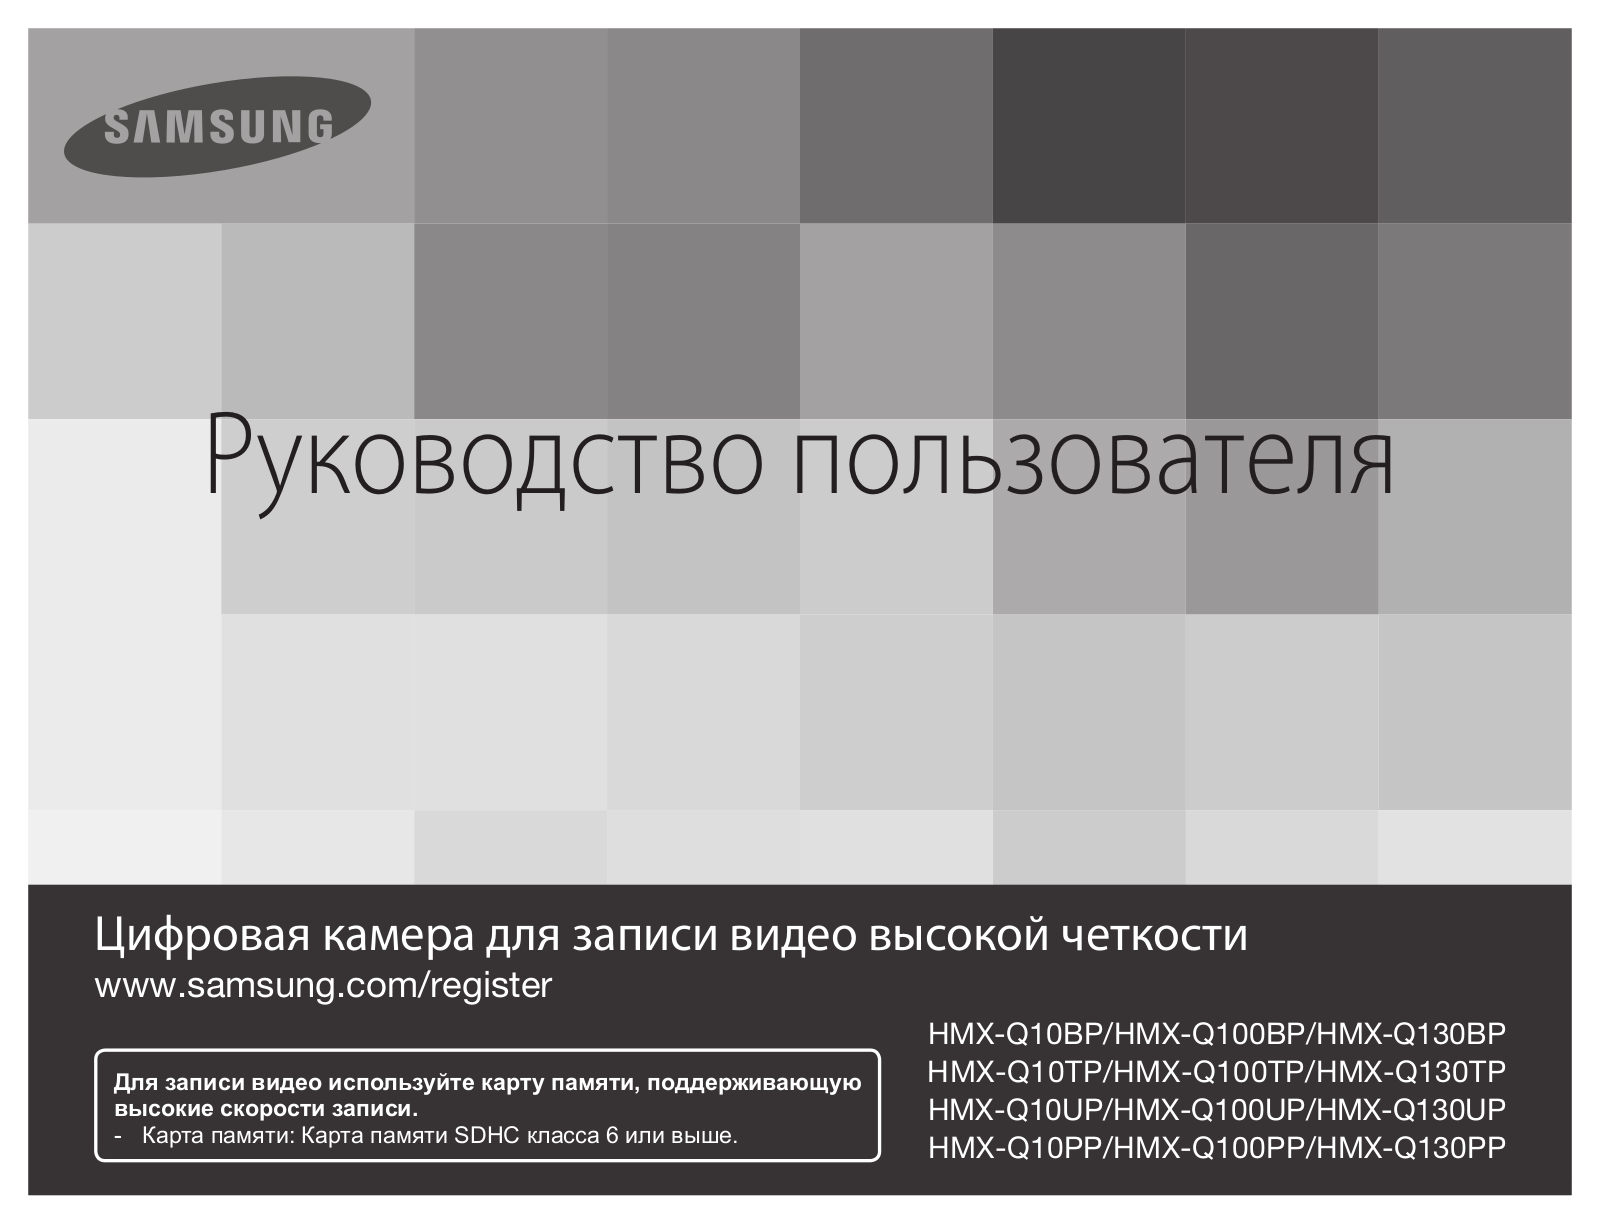 Samsung HMX-Q130PP User Manual